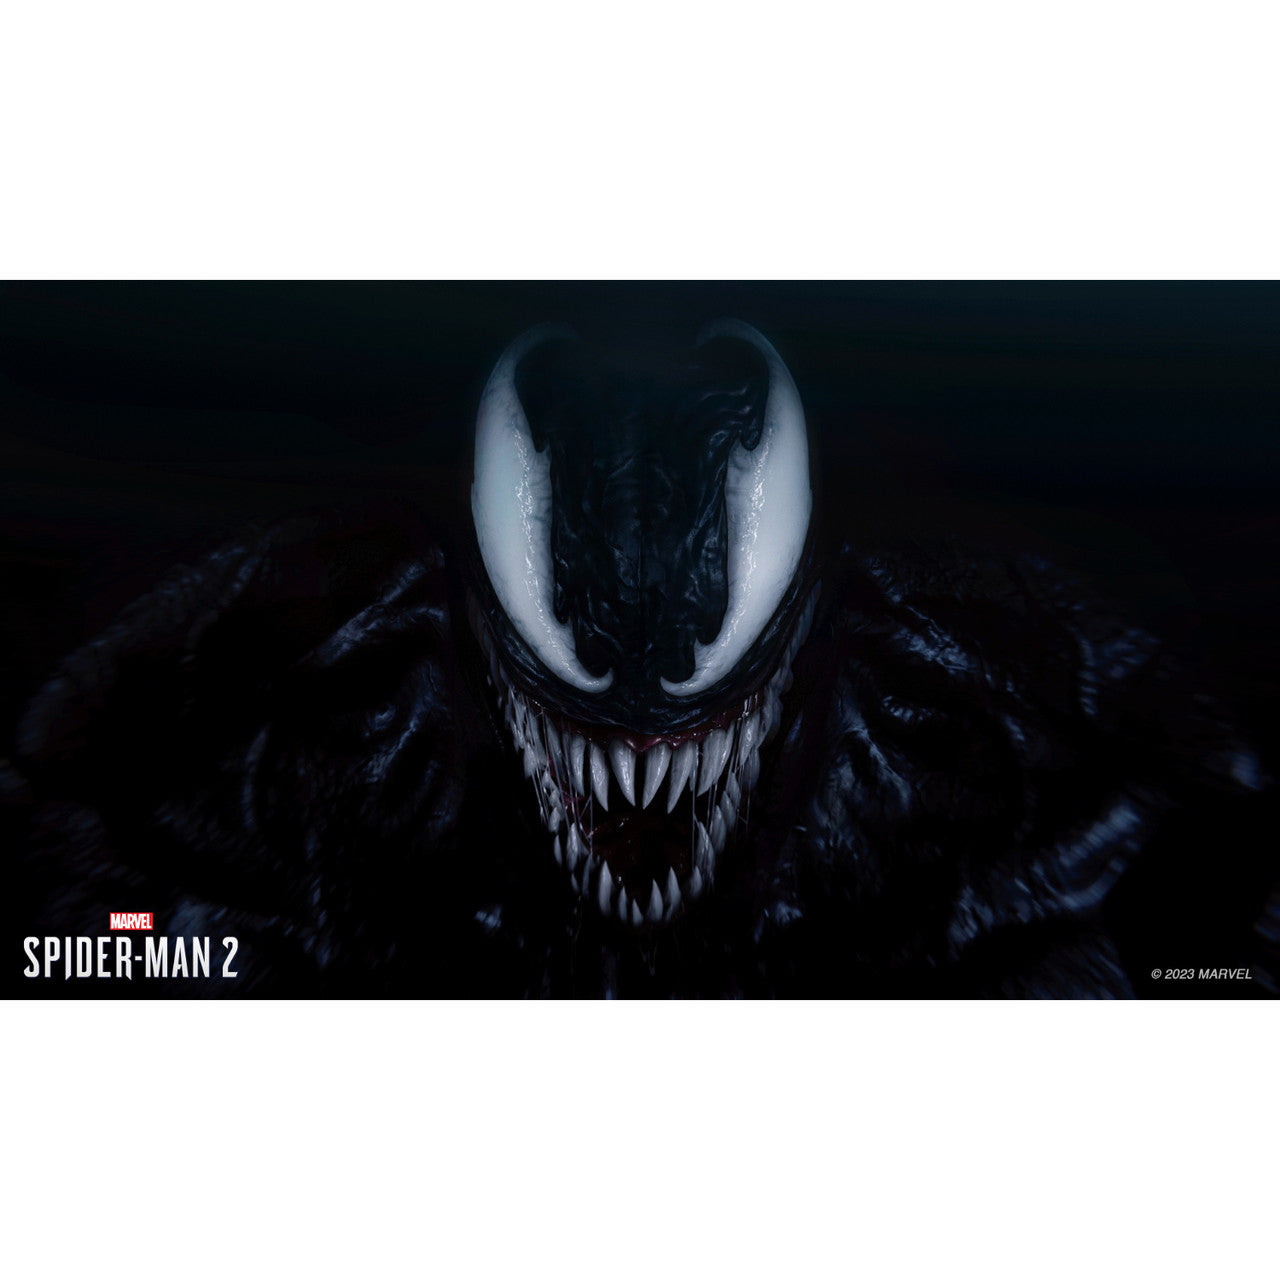 Marvel Spiderman 2 [Launch Edition] - (CIB) (Playstation 5)